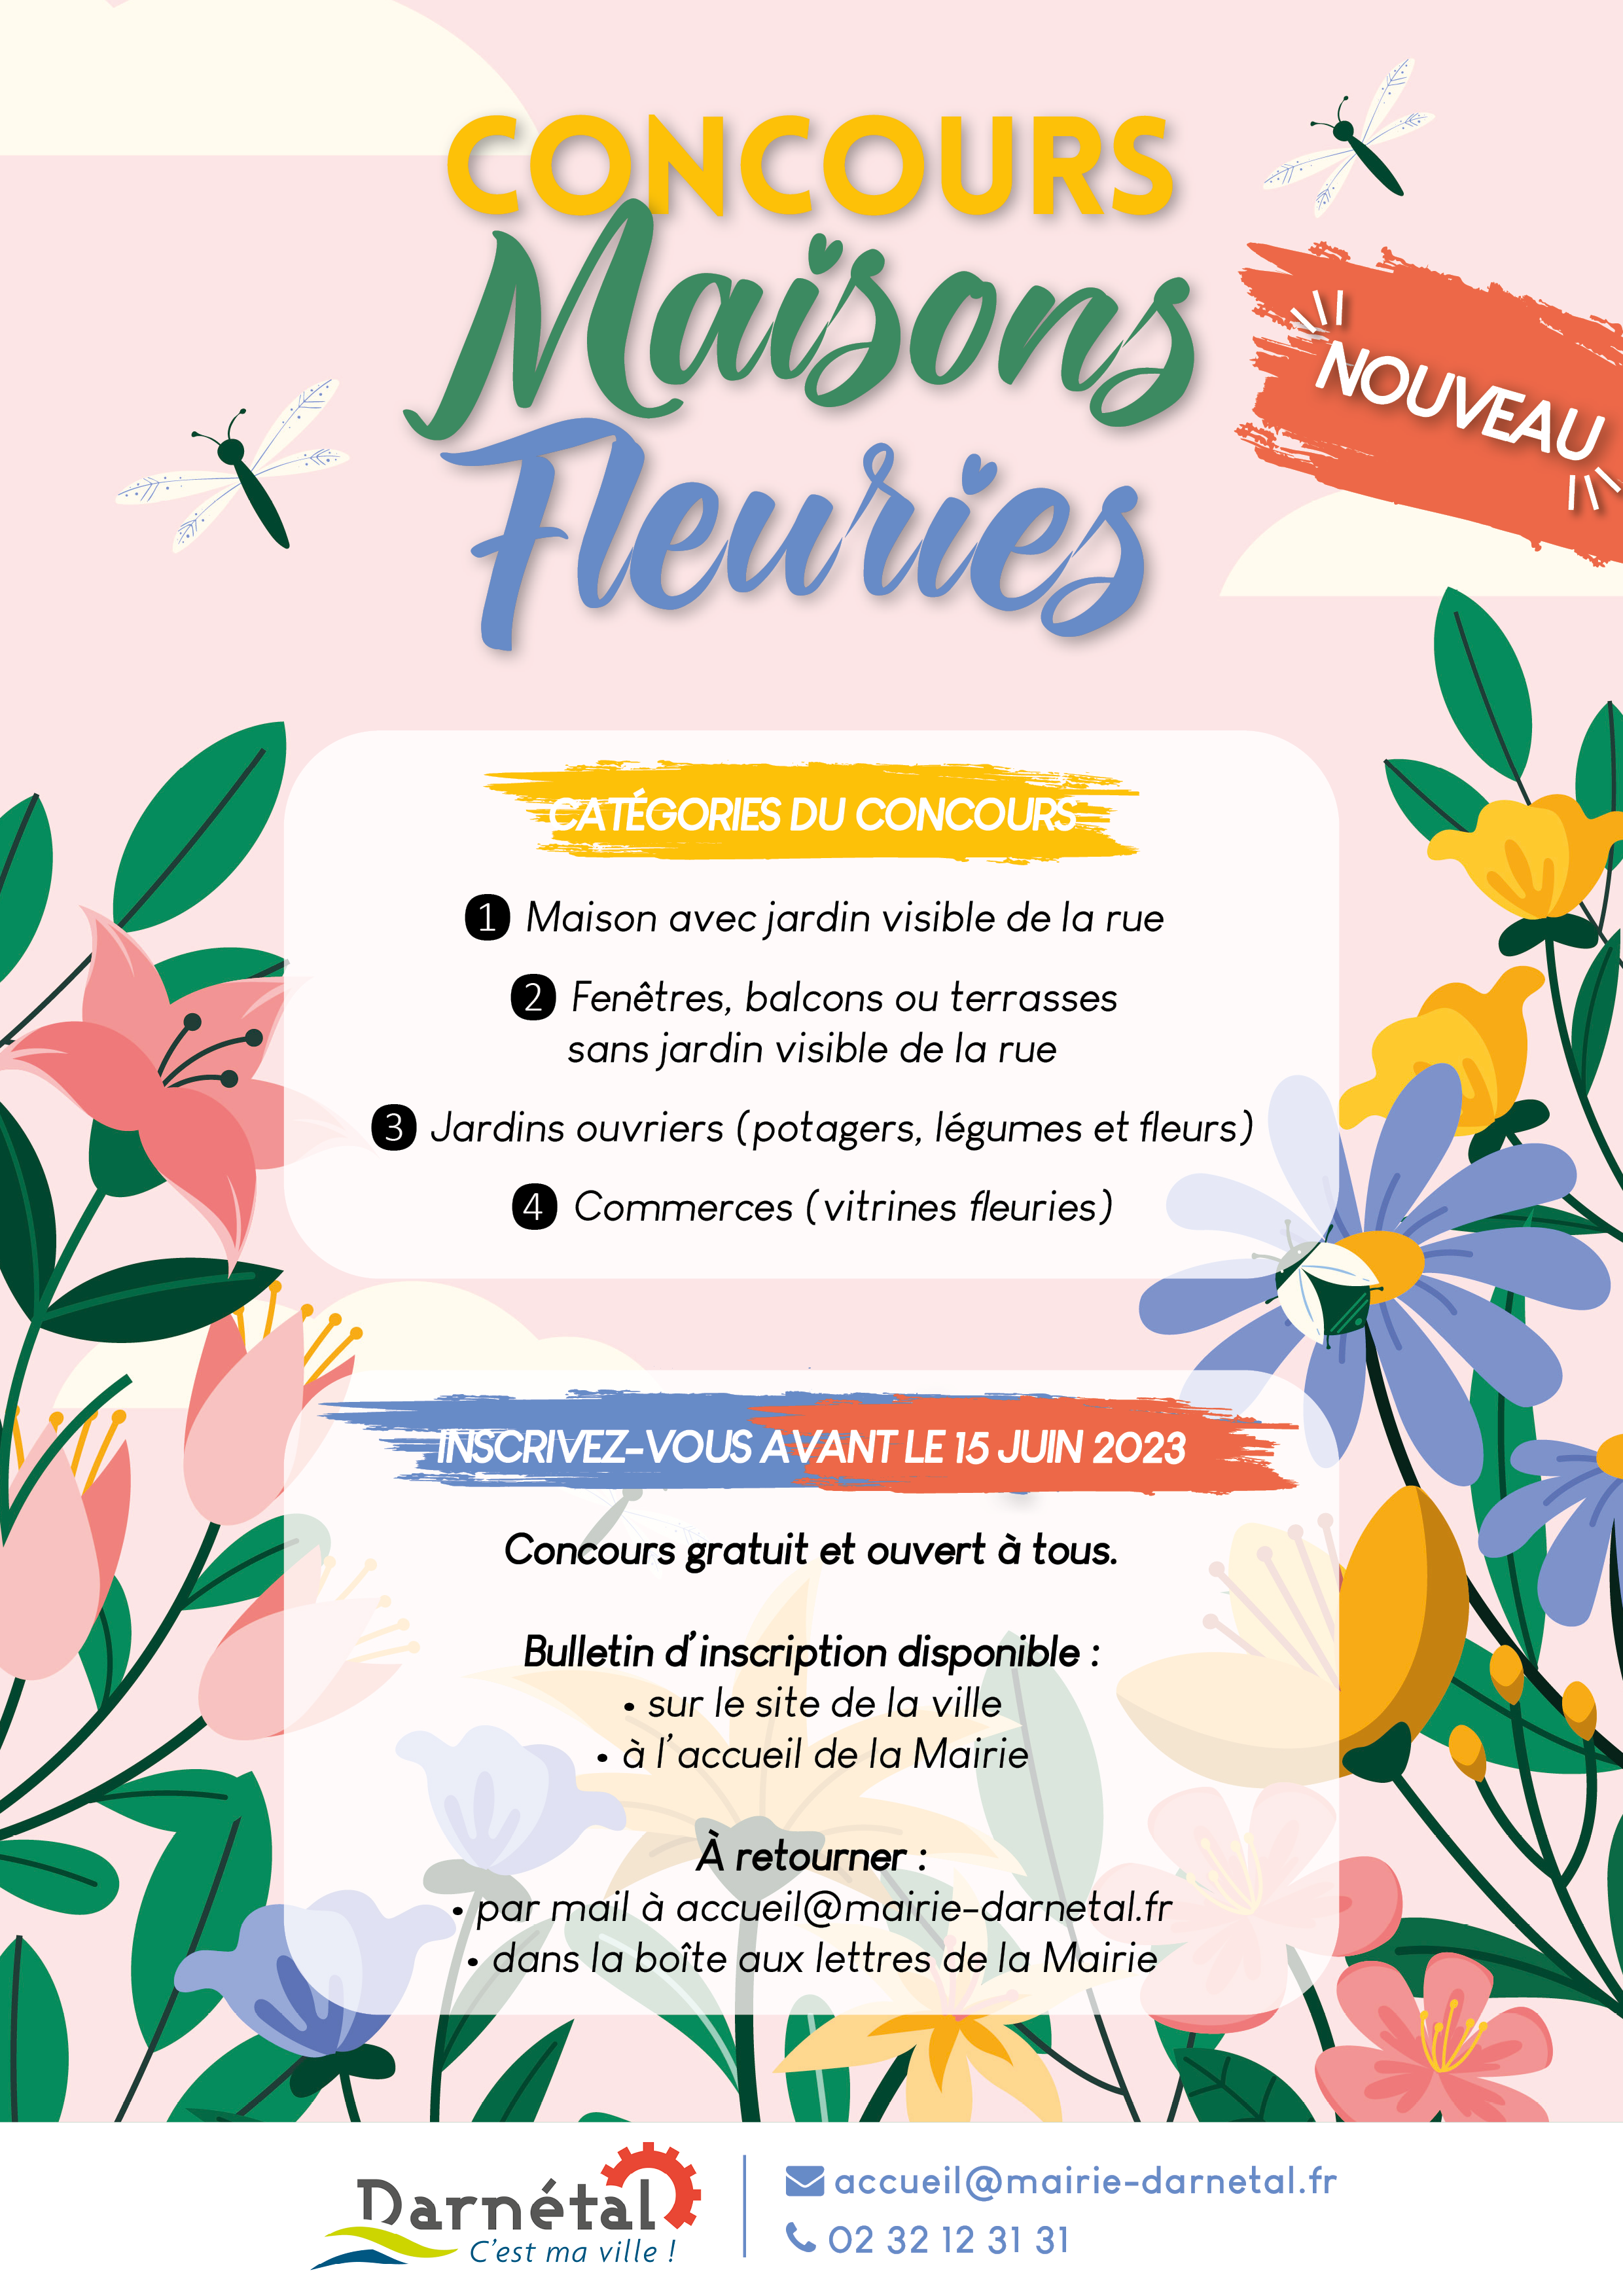 Concours Maisons Fleuries !